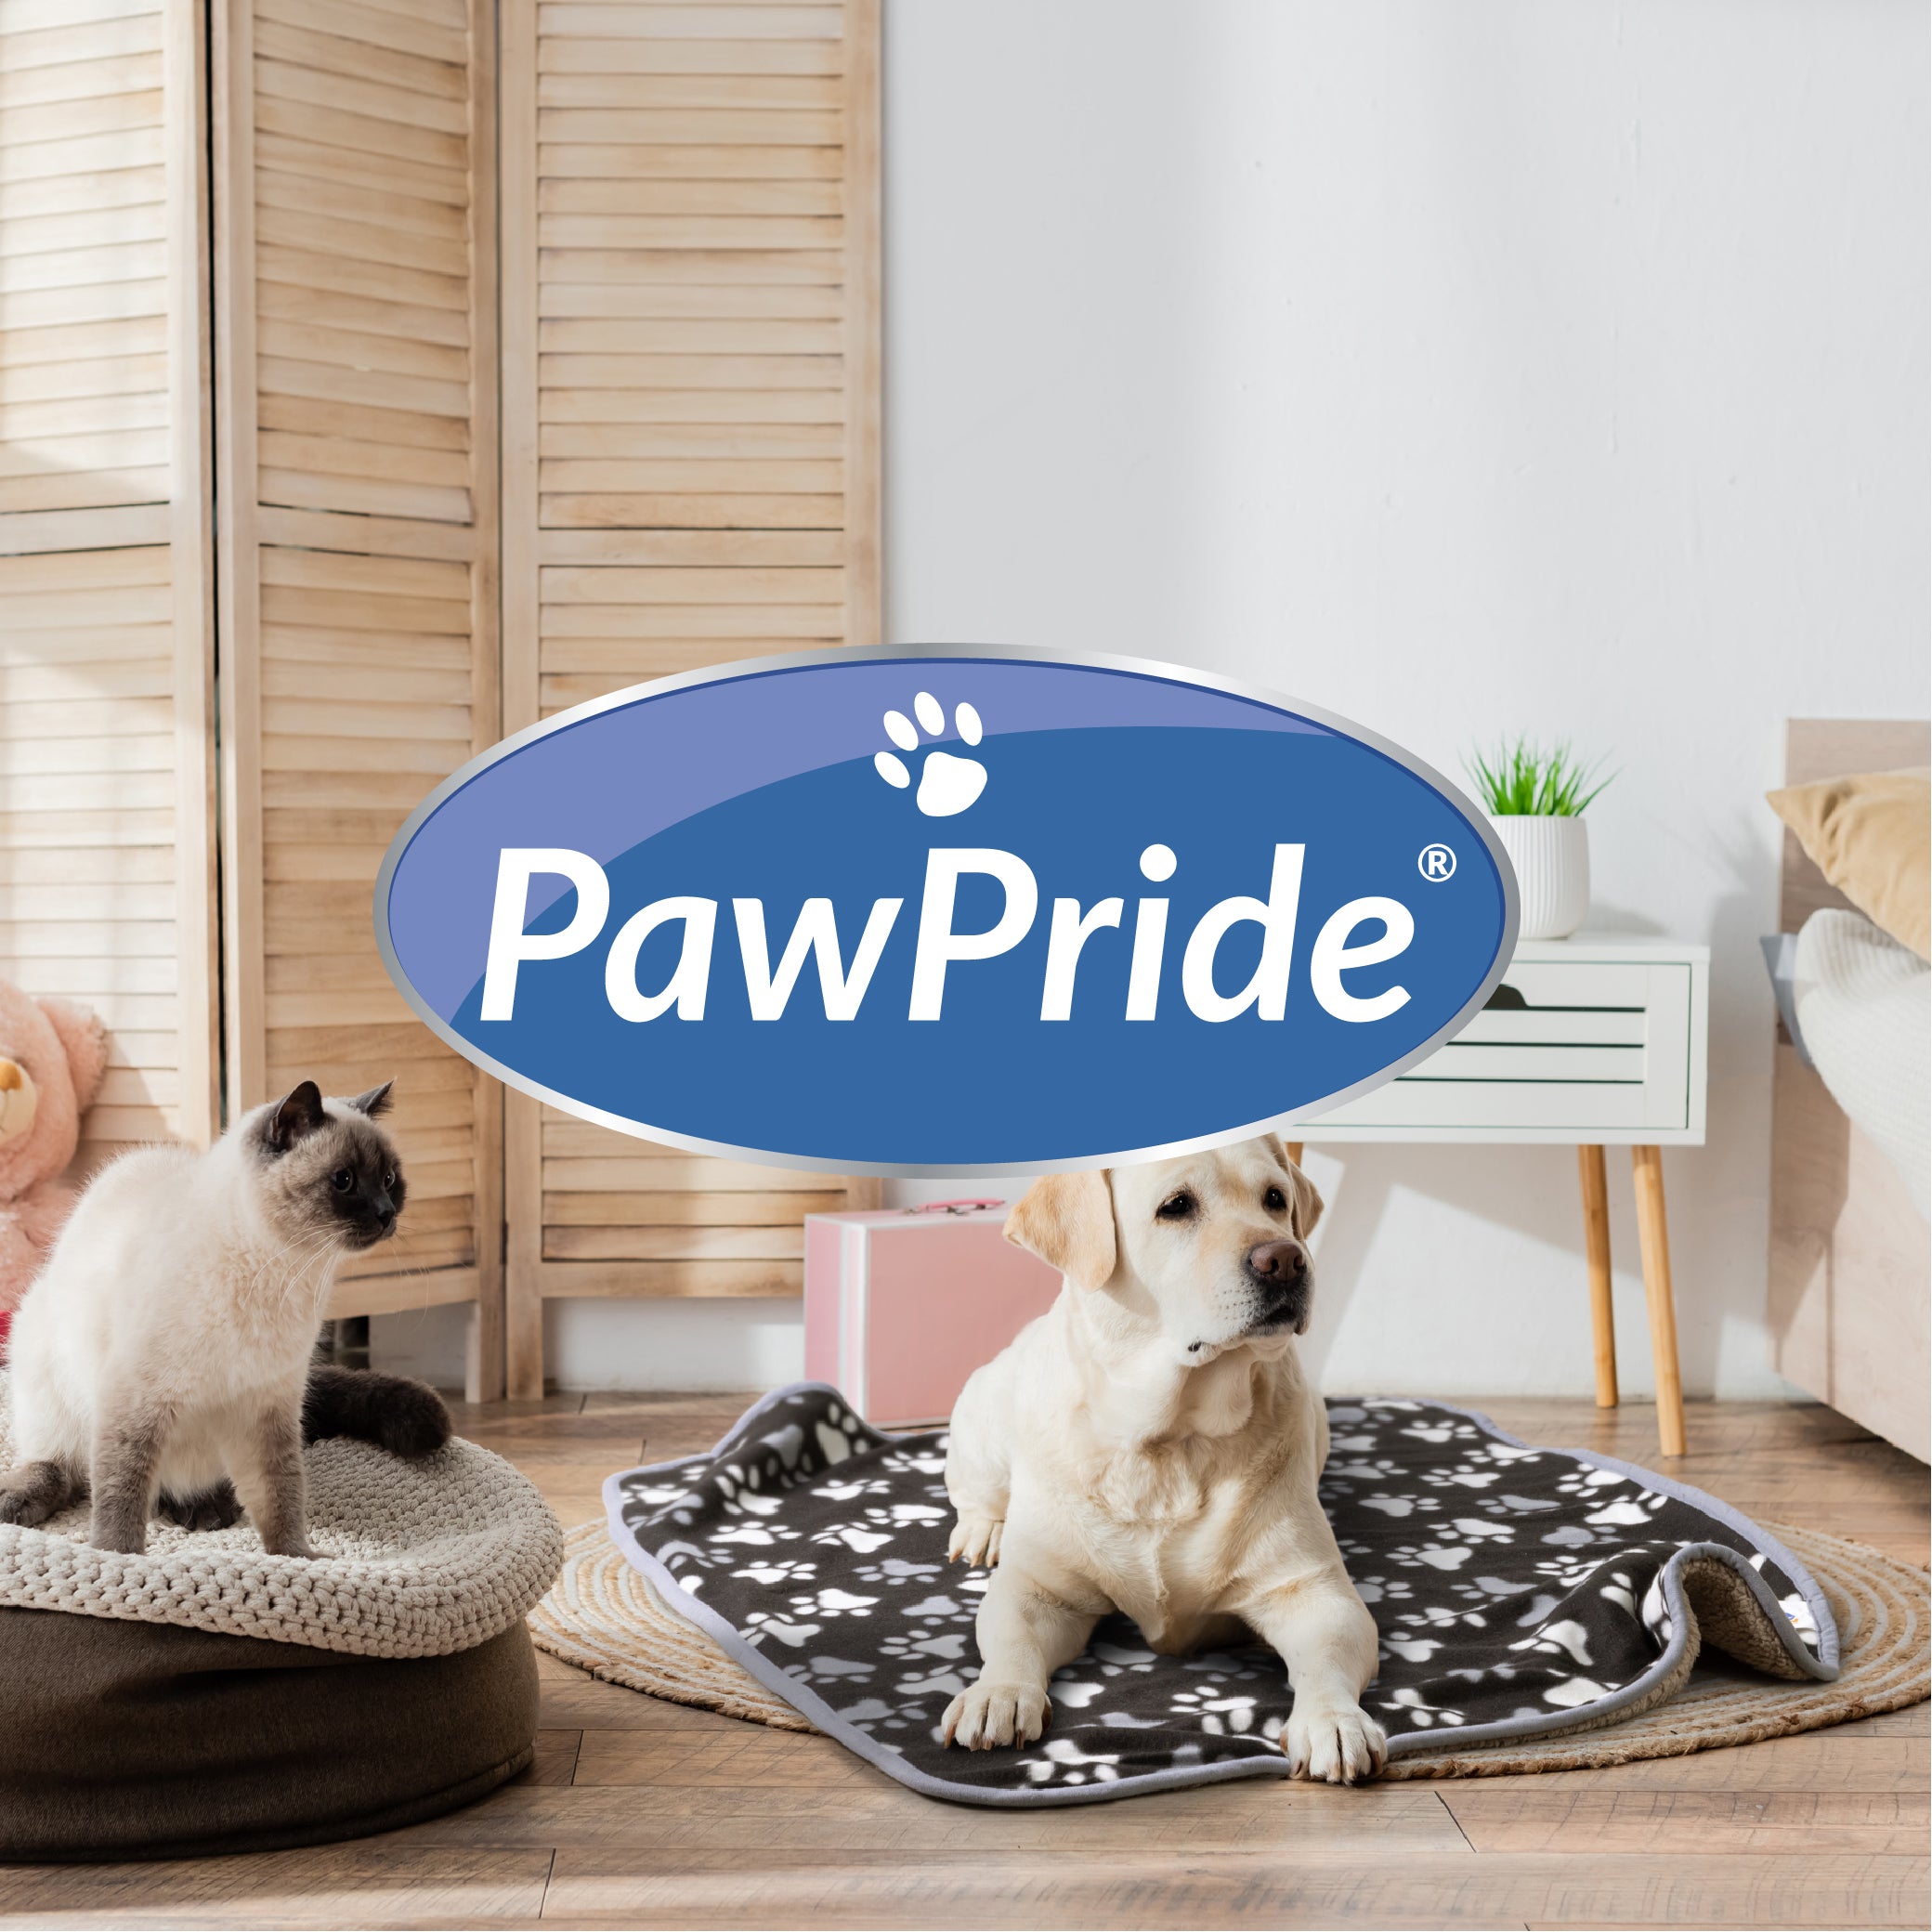 Pawpride. Pet essentials for all animals | DSL